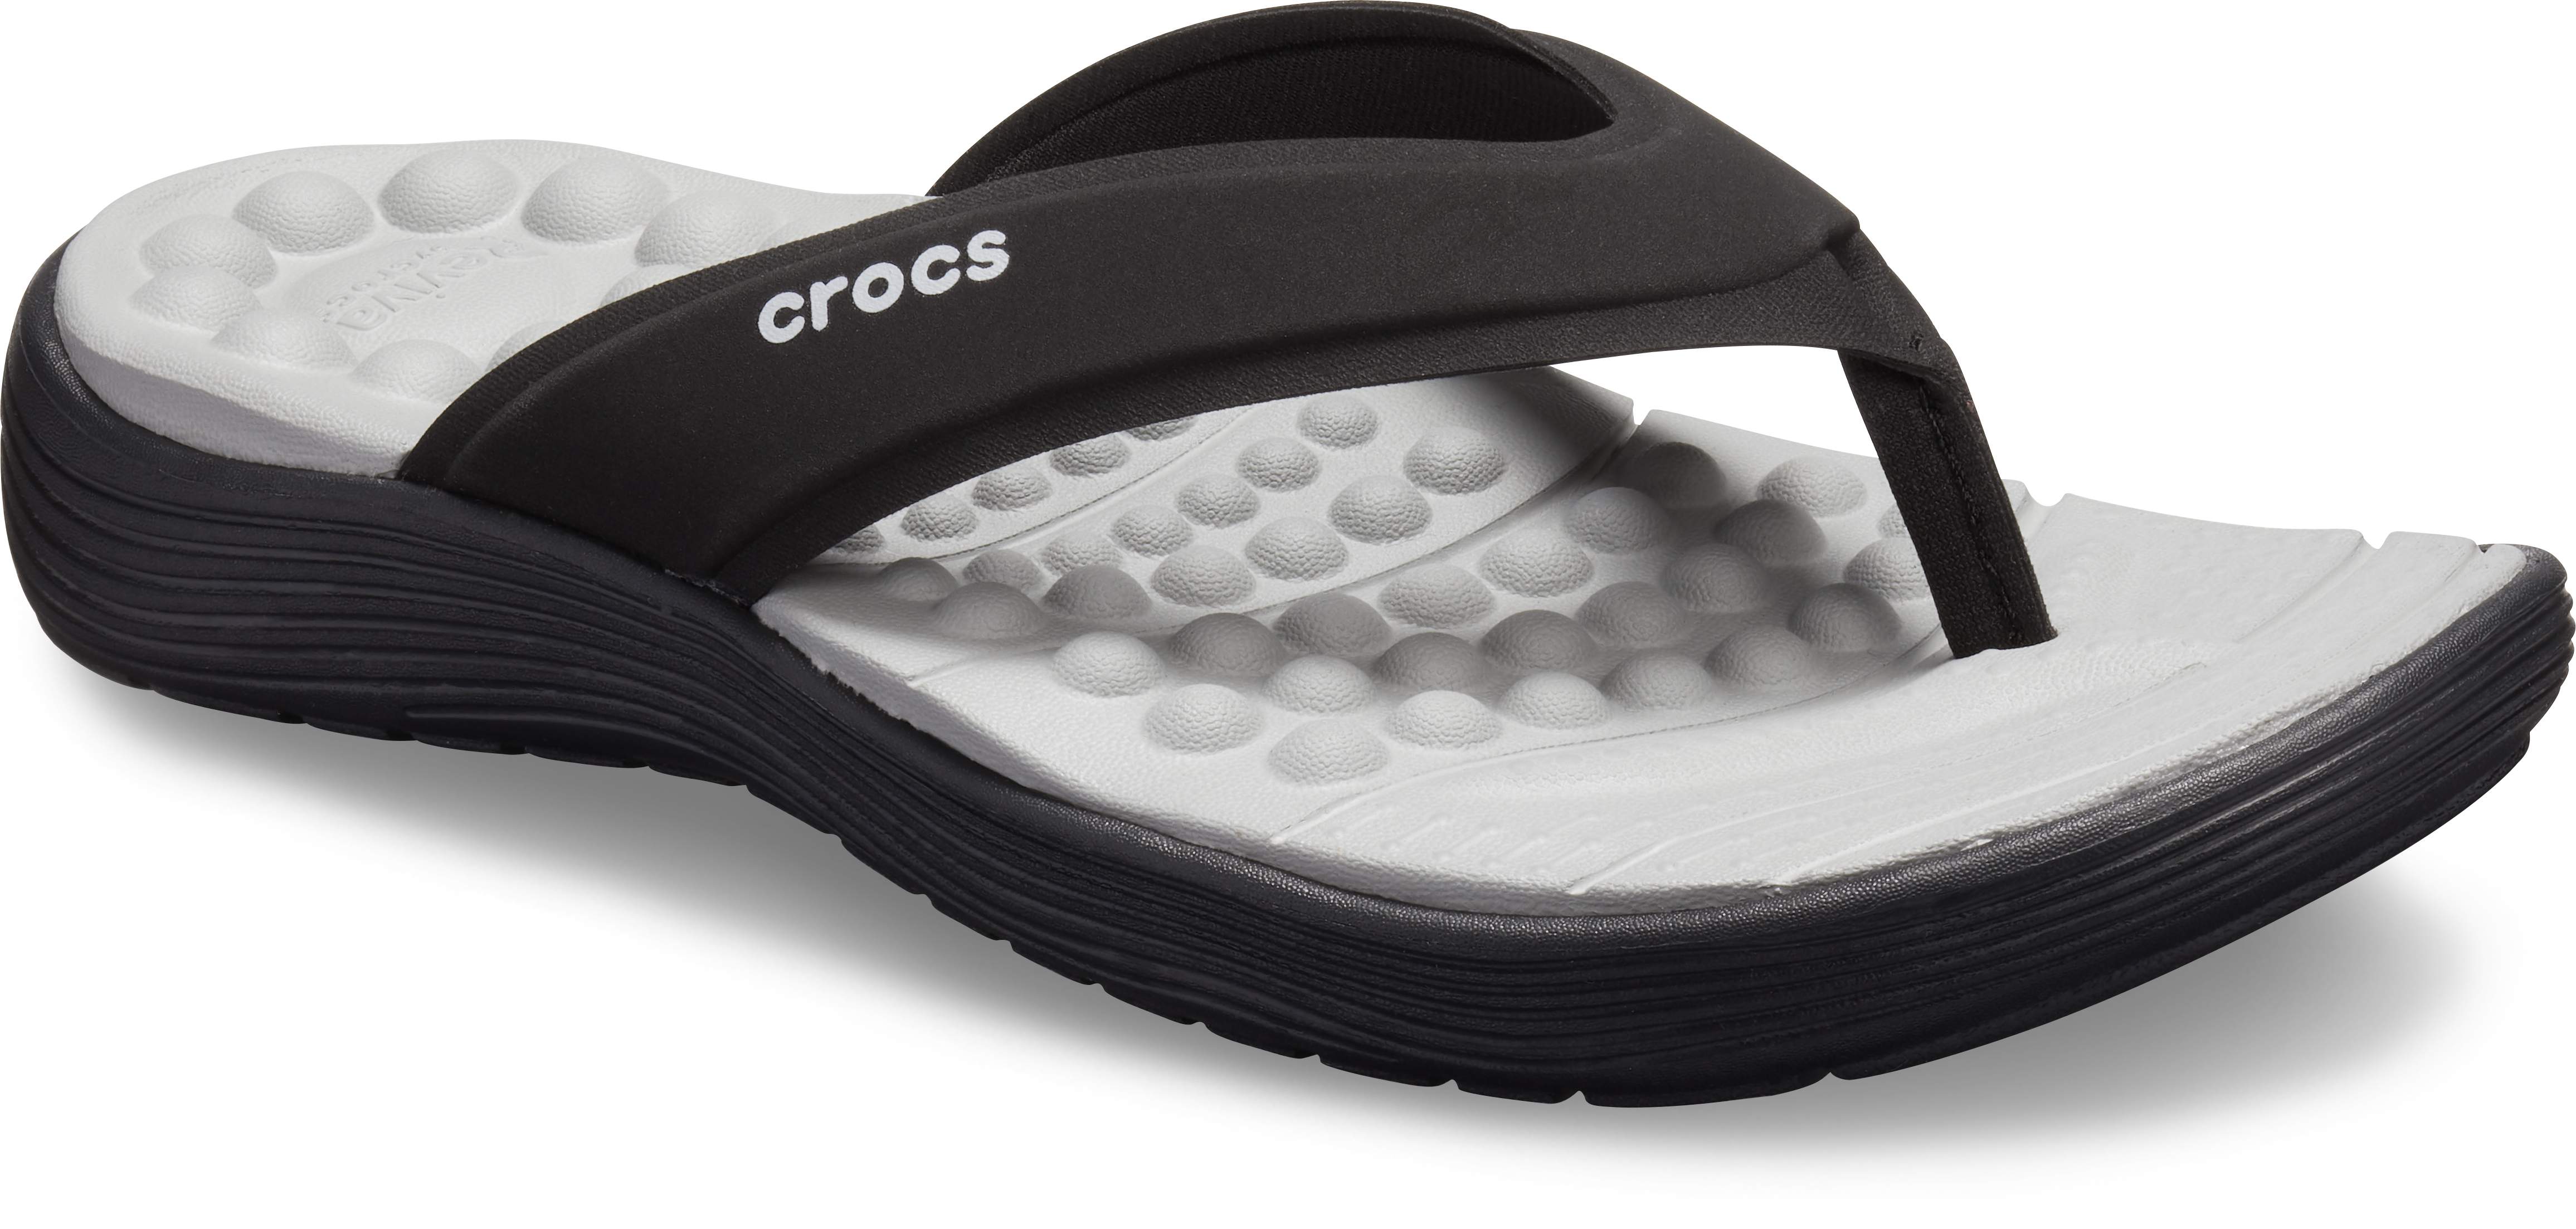 croc thongs for sale